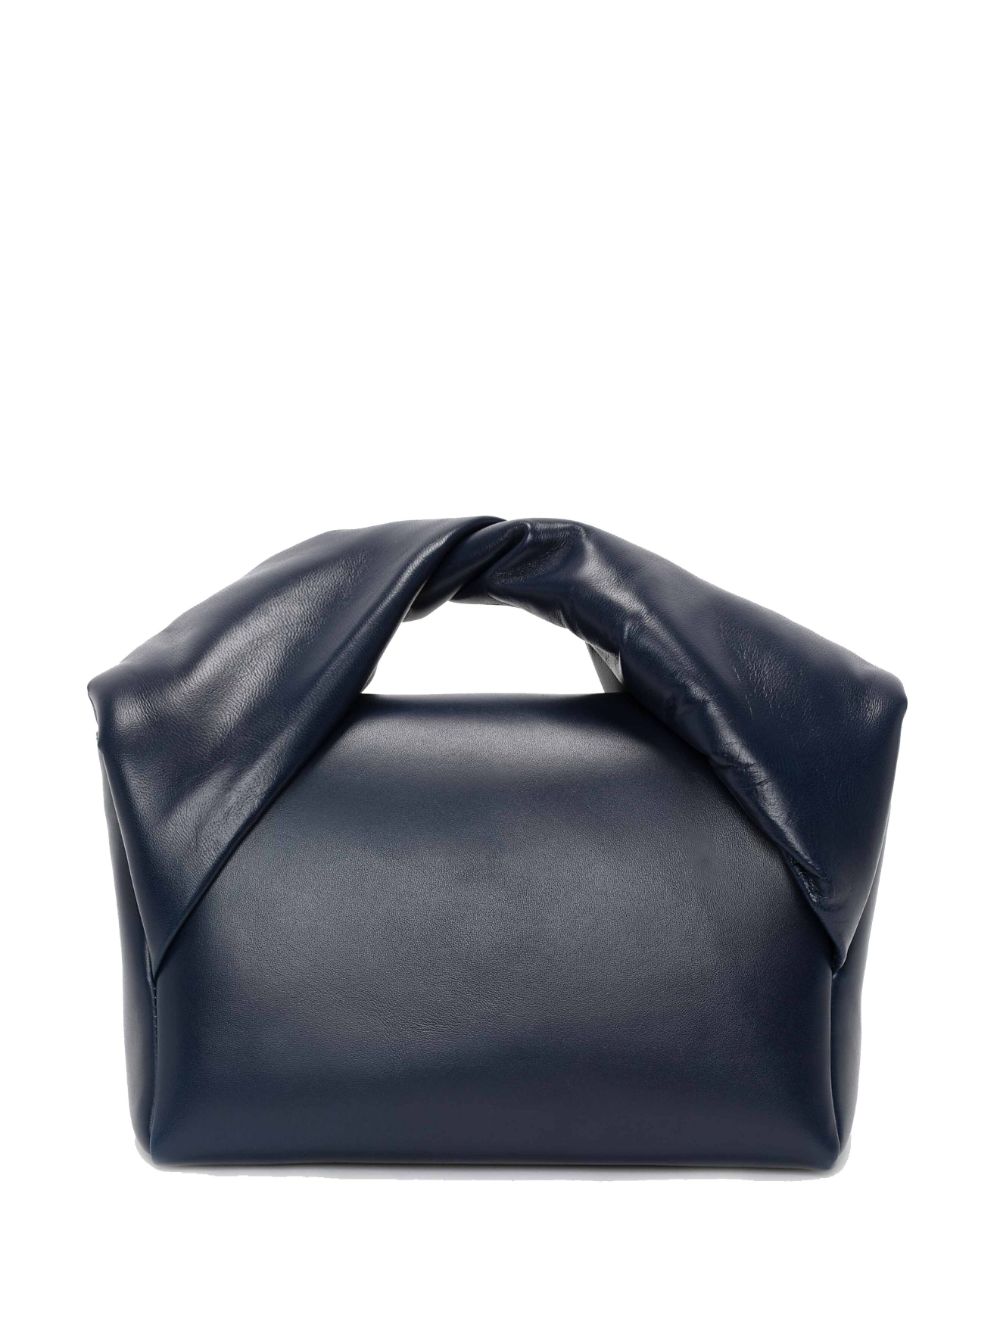 Navy Handbag for Women with Shoulder & Crossbody Options